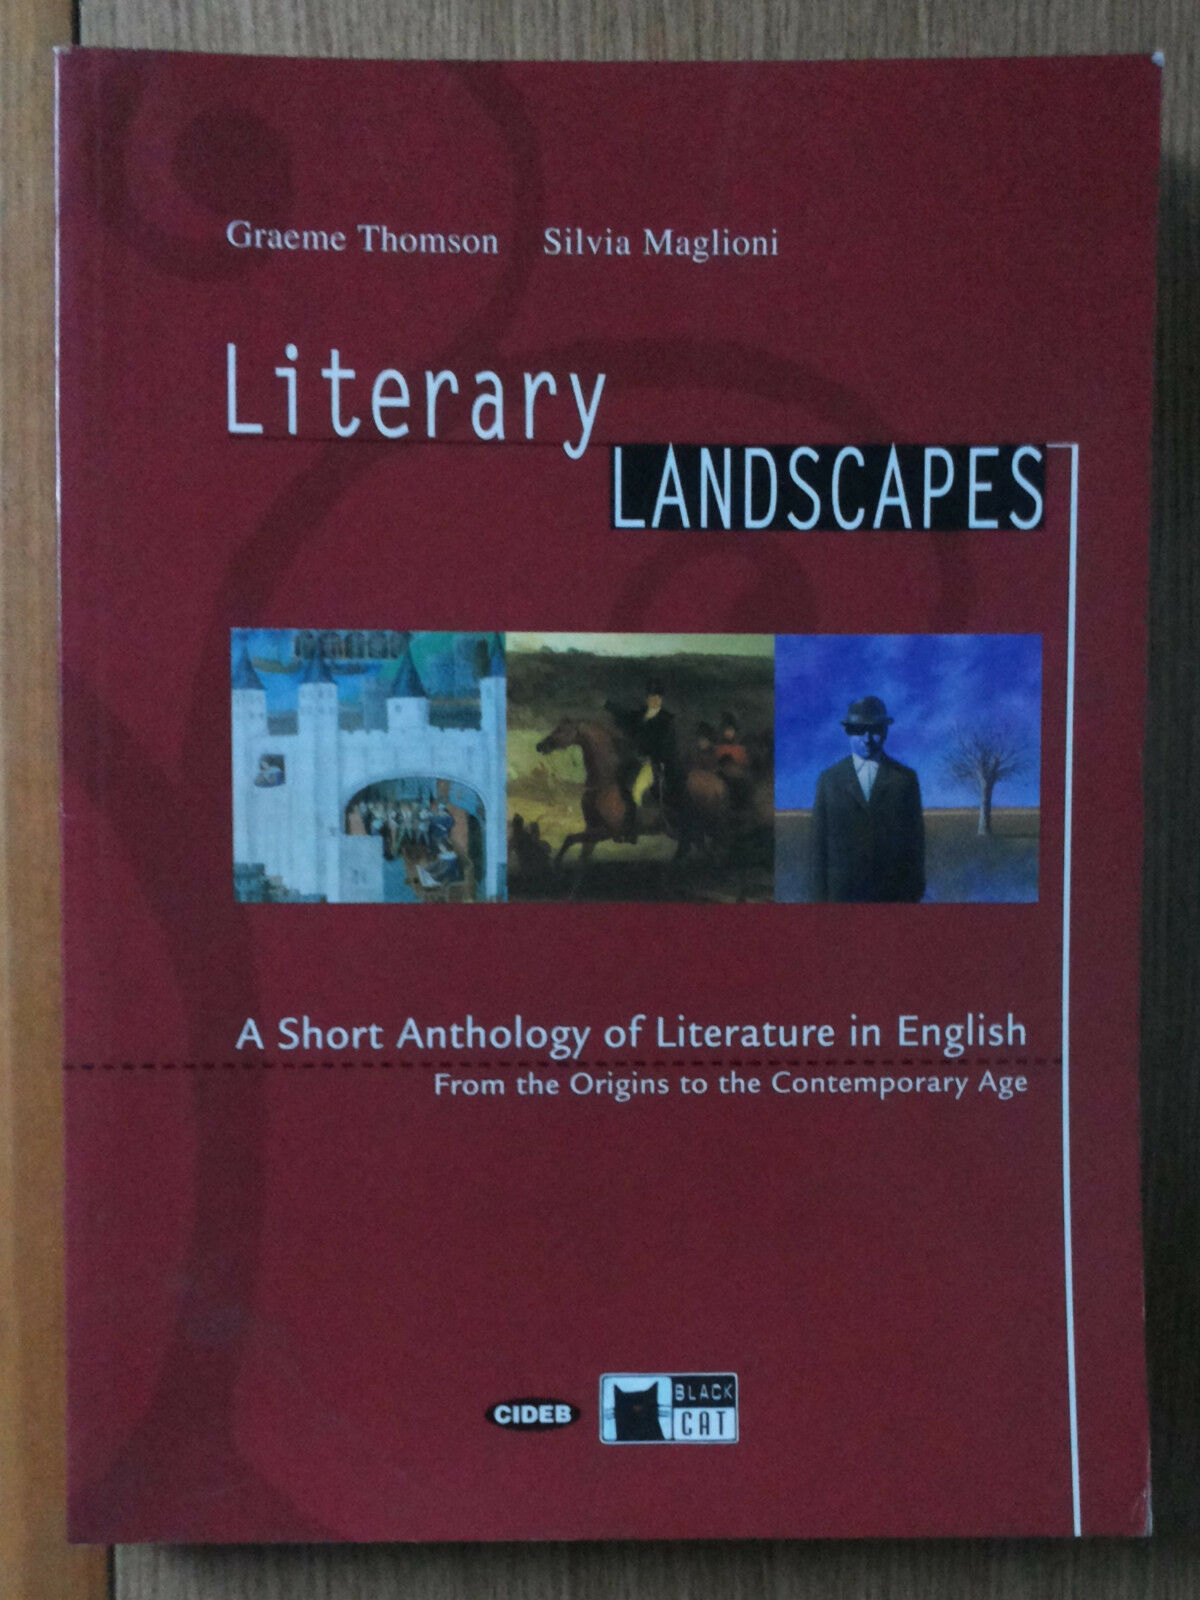 Literary landscapes - Thomson,Maglioni - CIDEB,2002 - R - Thomson graeme